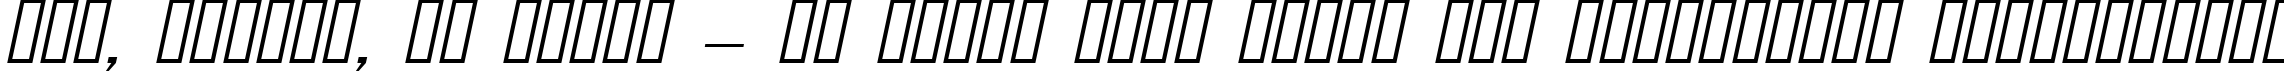 Пример написания шрифтом Pecot Oblique текста на украинском